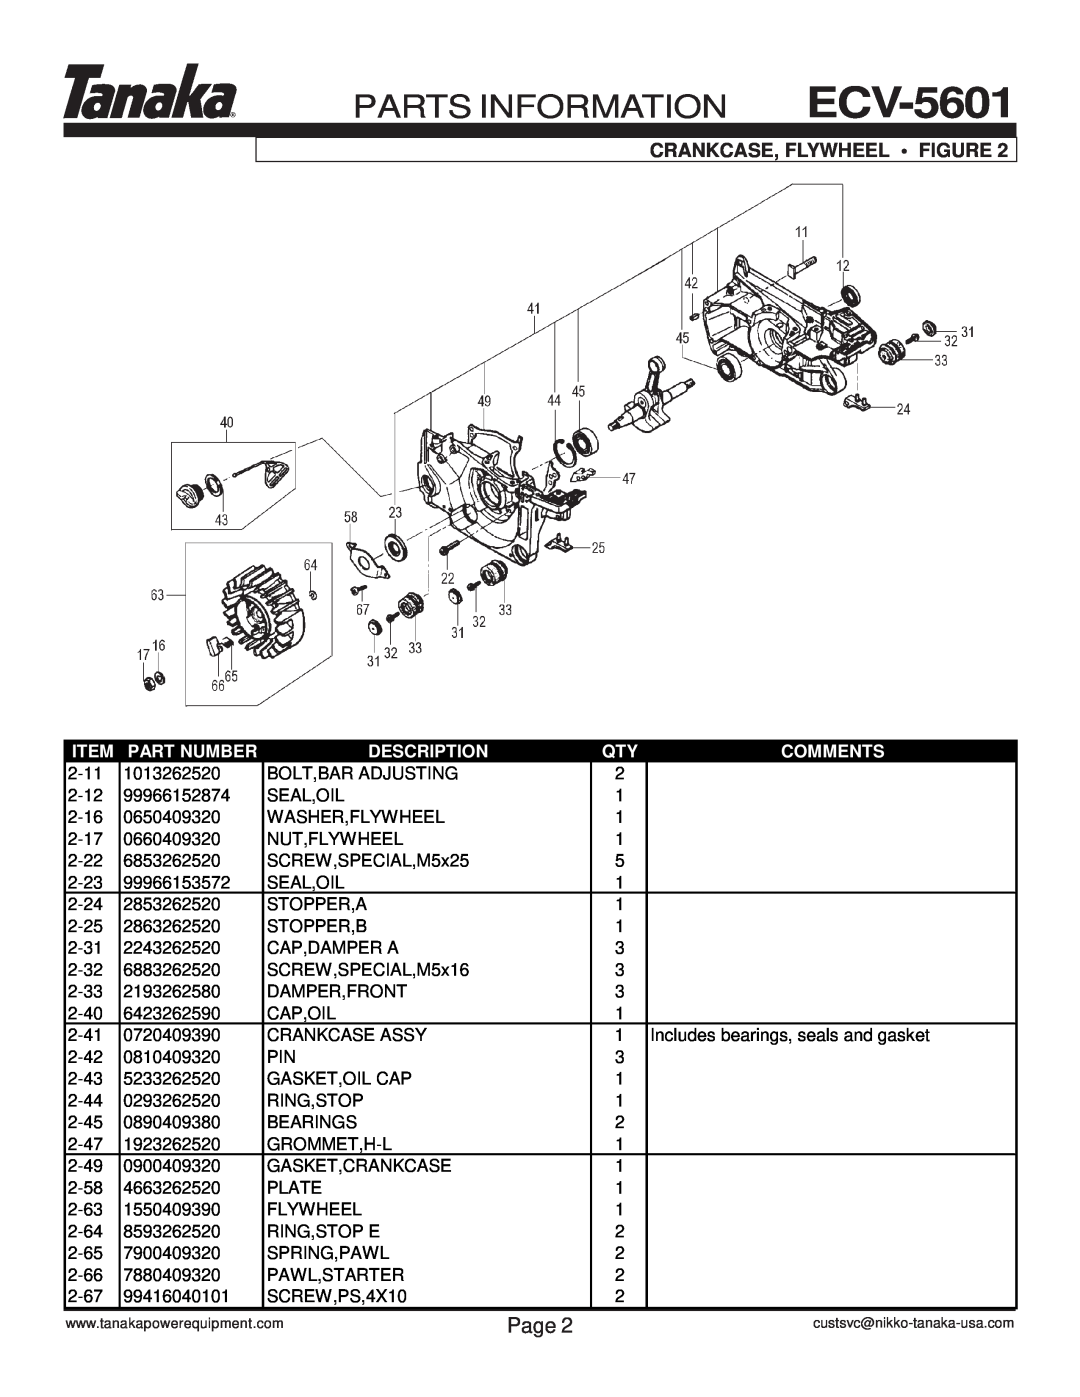 Tanaka manual Crankcase, Flywheel Figure, PARTS INFORMATION ECV-5601, Page, Part Number, Description, Comments 